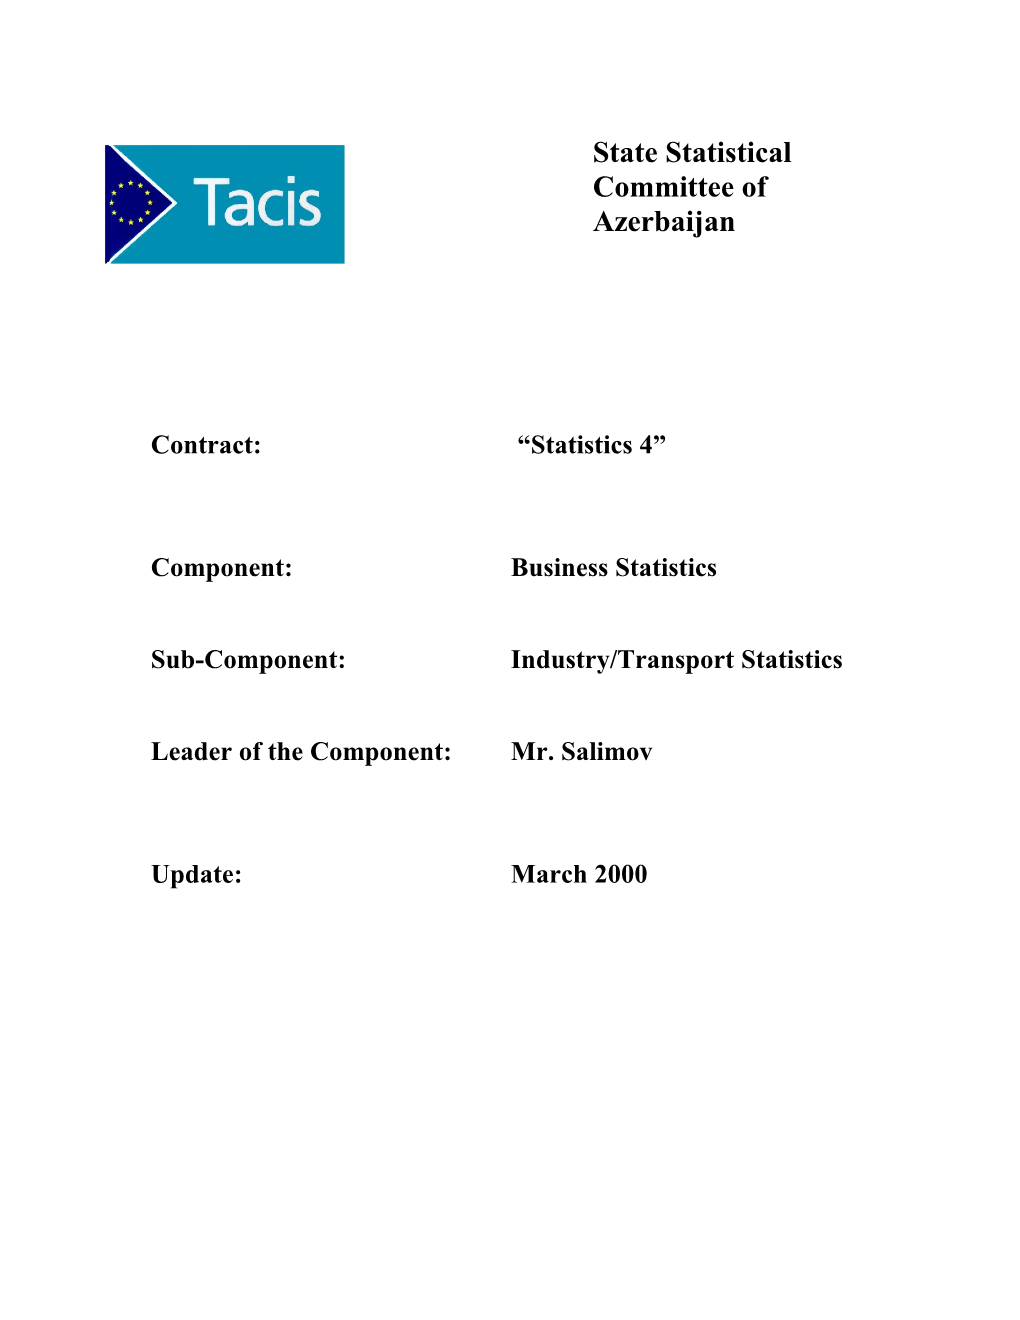 Sub-Component:Industry/Transport Statistics